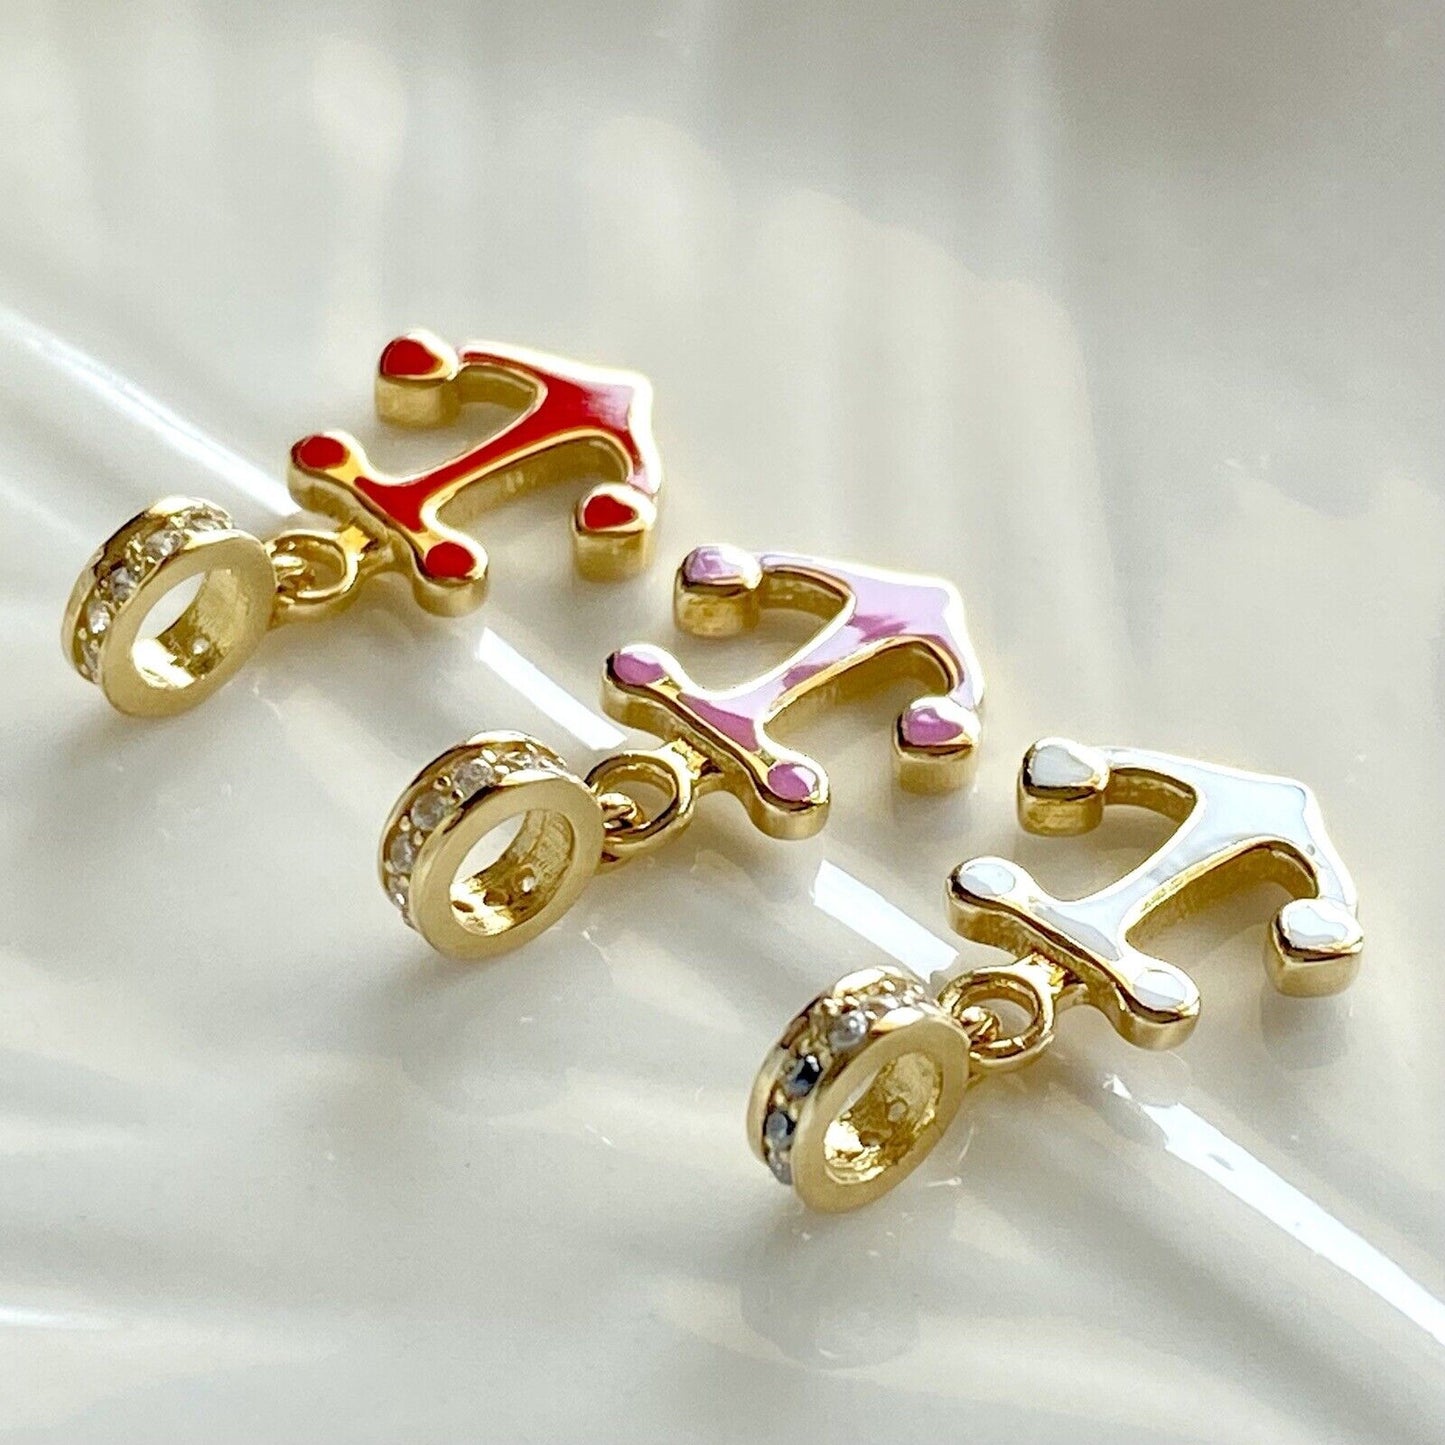 Adorable 14k Yellow Gold & Enamel Anchor Charm for European Bracelets, New